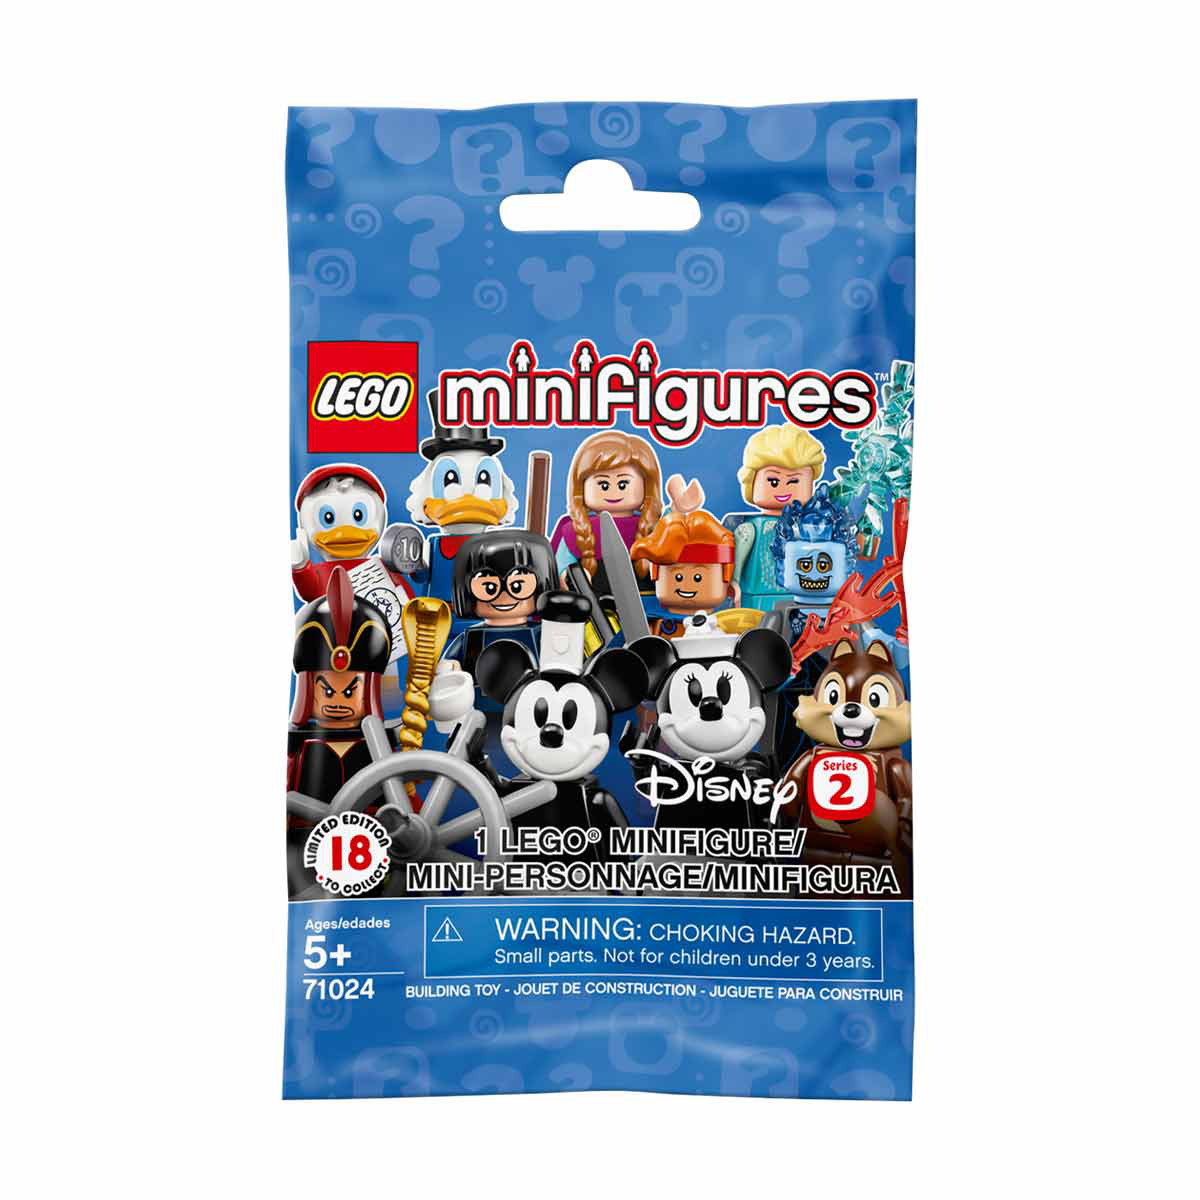 LEGO Collectible Disney Minifigures coming!